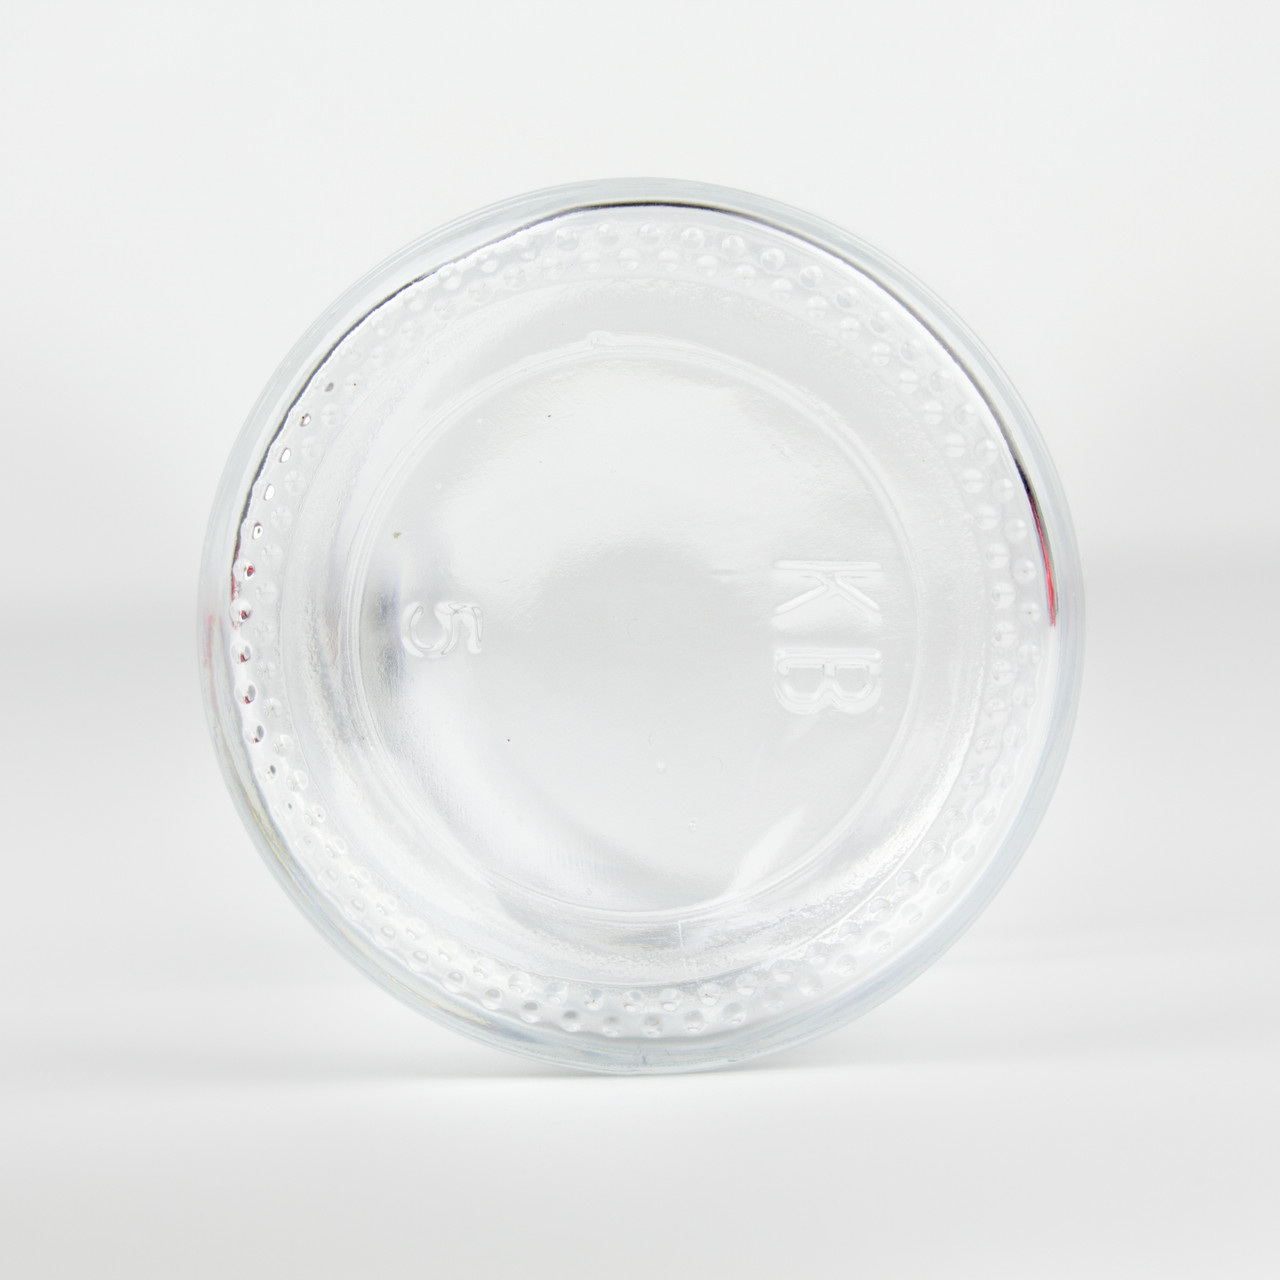 3oz Premium Glass Jars w/ Child Resistant Lids - Orange Lid (120 Qty)